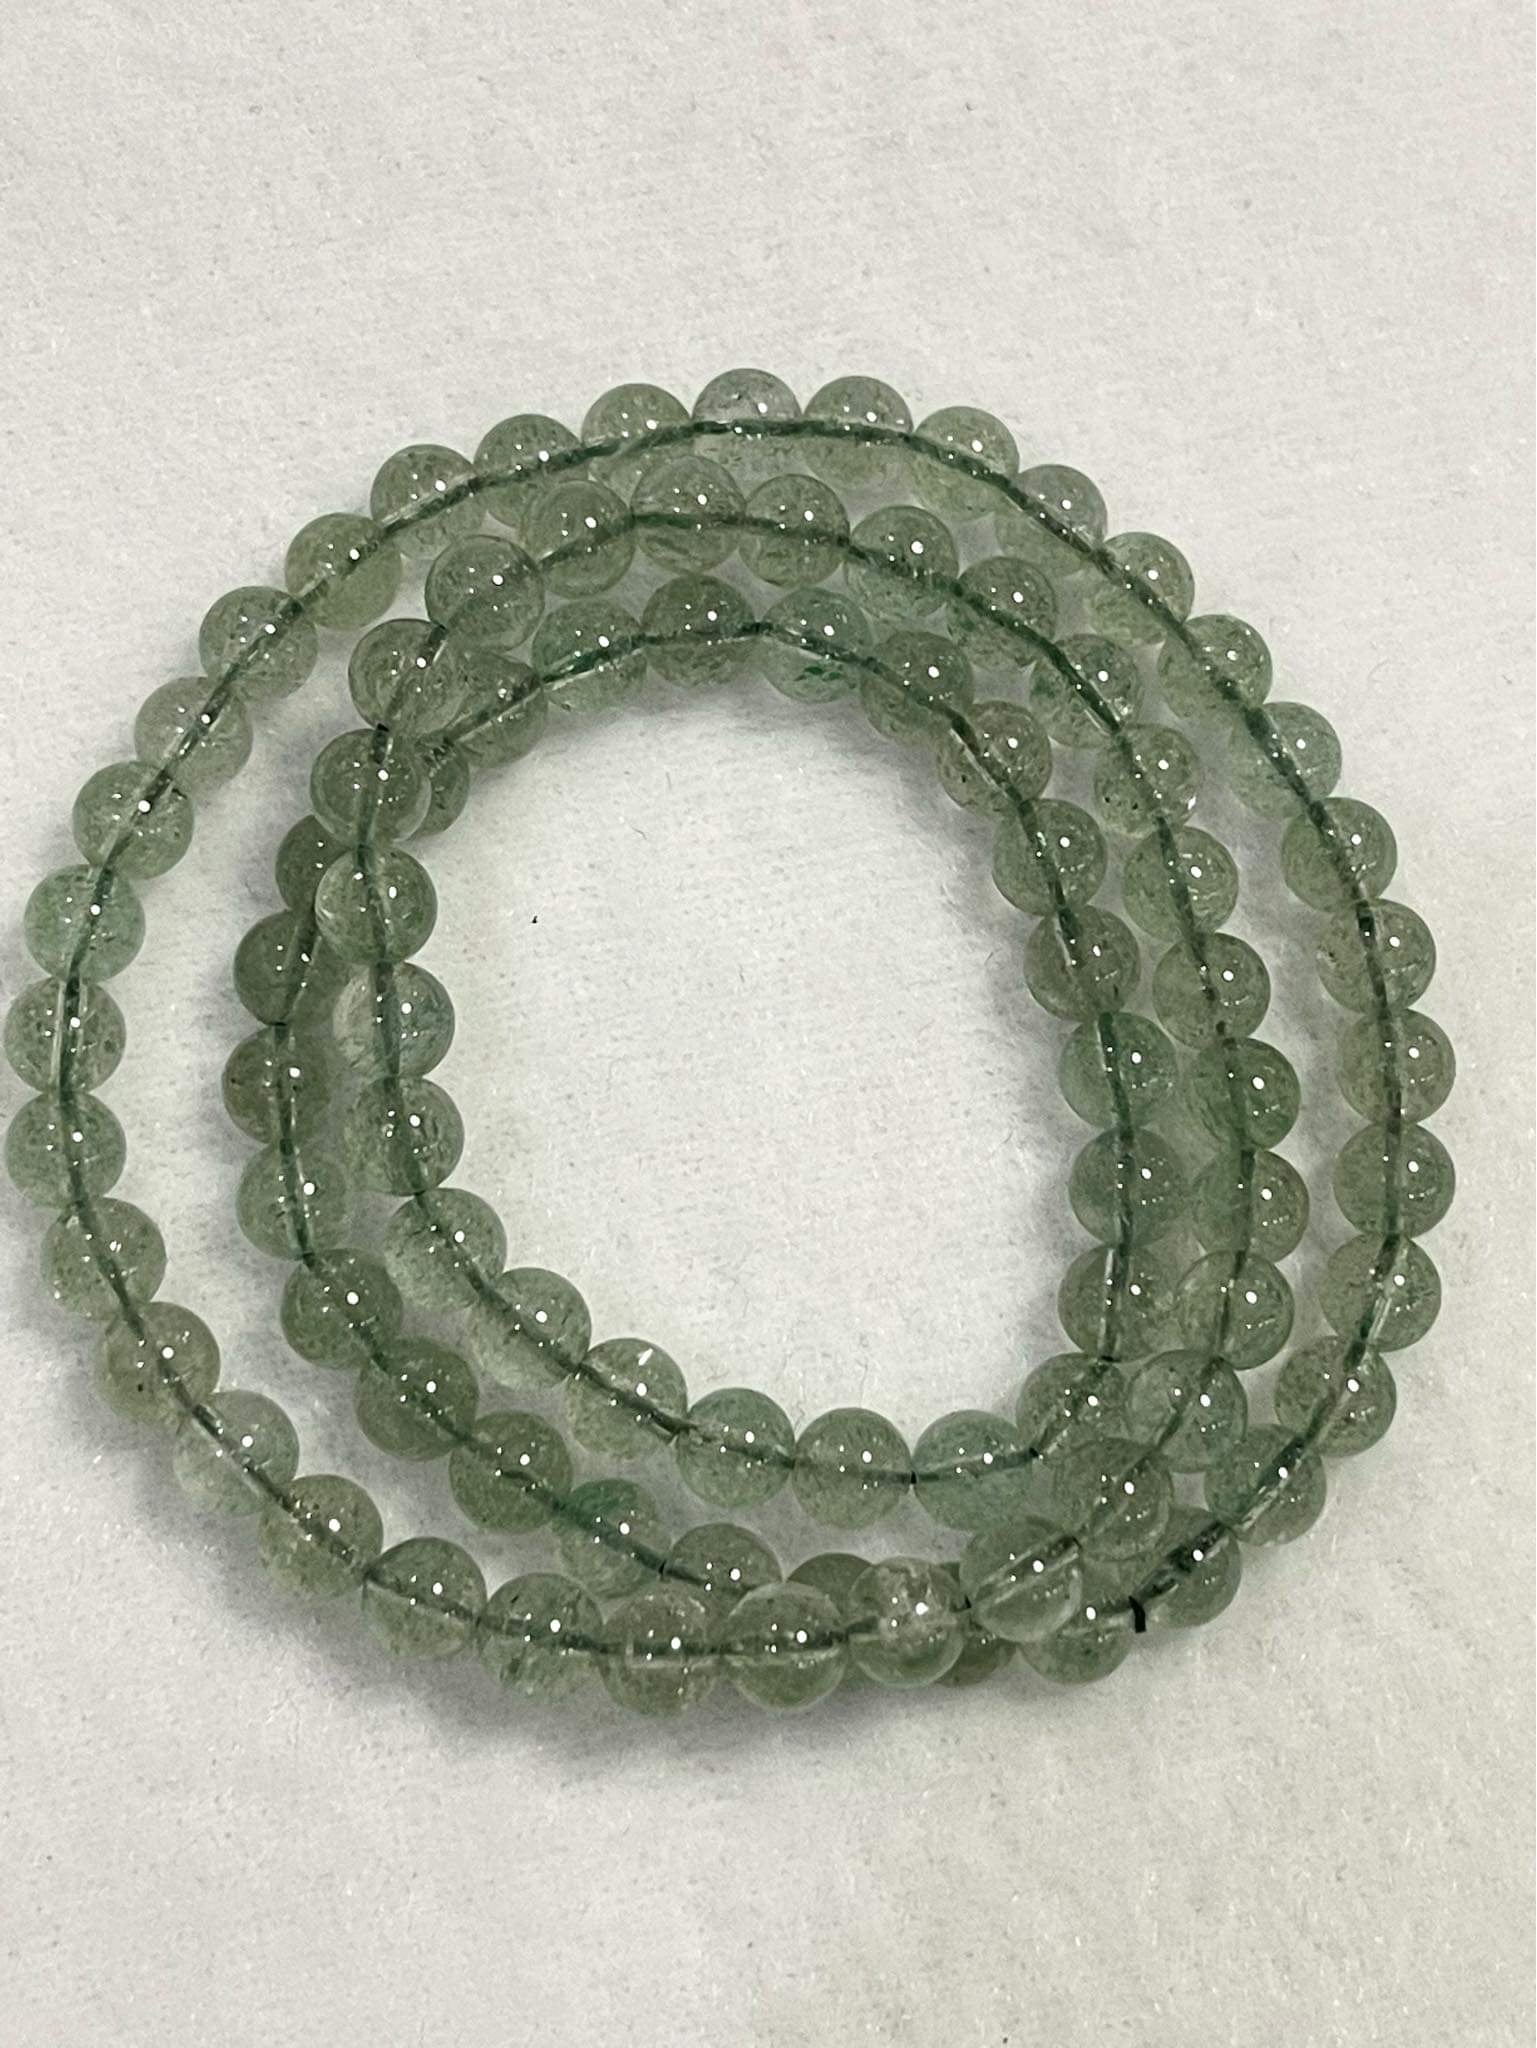 Bracelet or Necklace, Strawberry green quartz, approx. 7mm, 80 plus beads